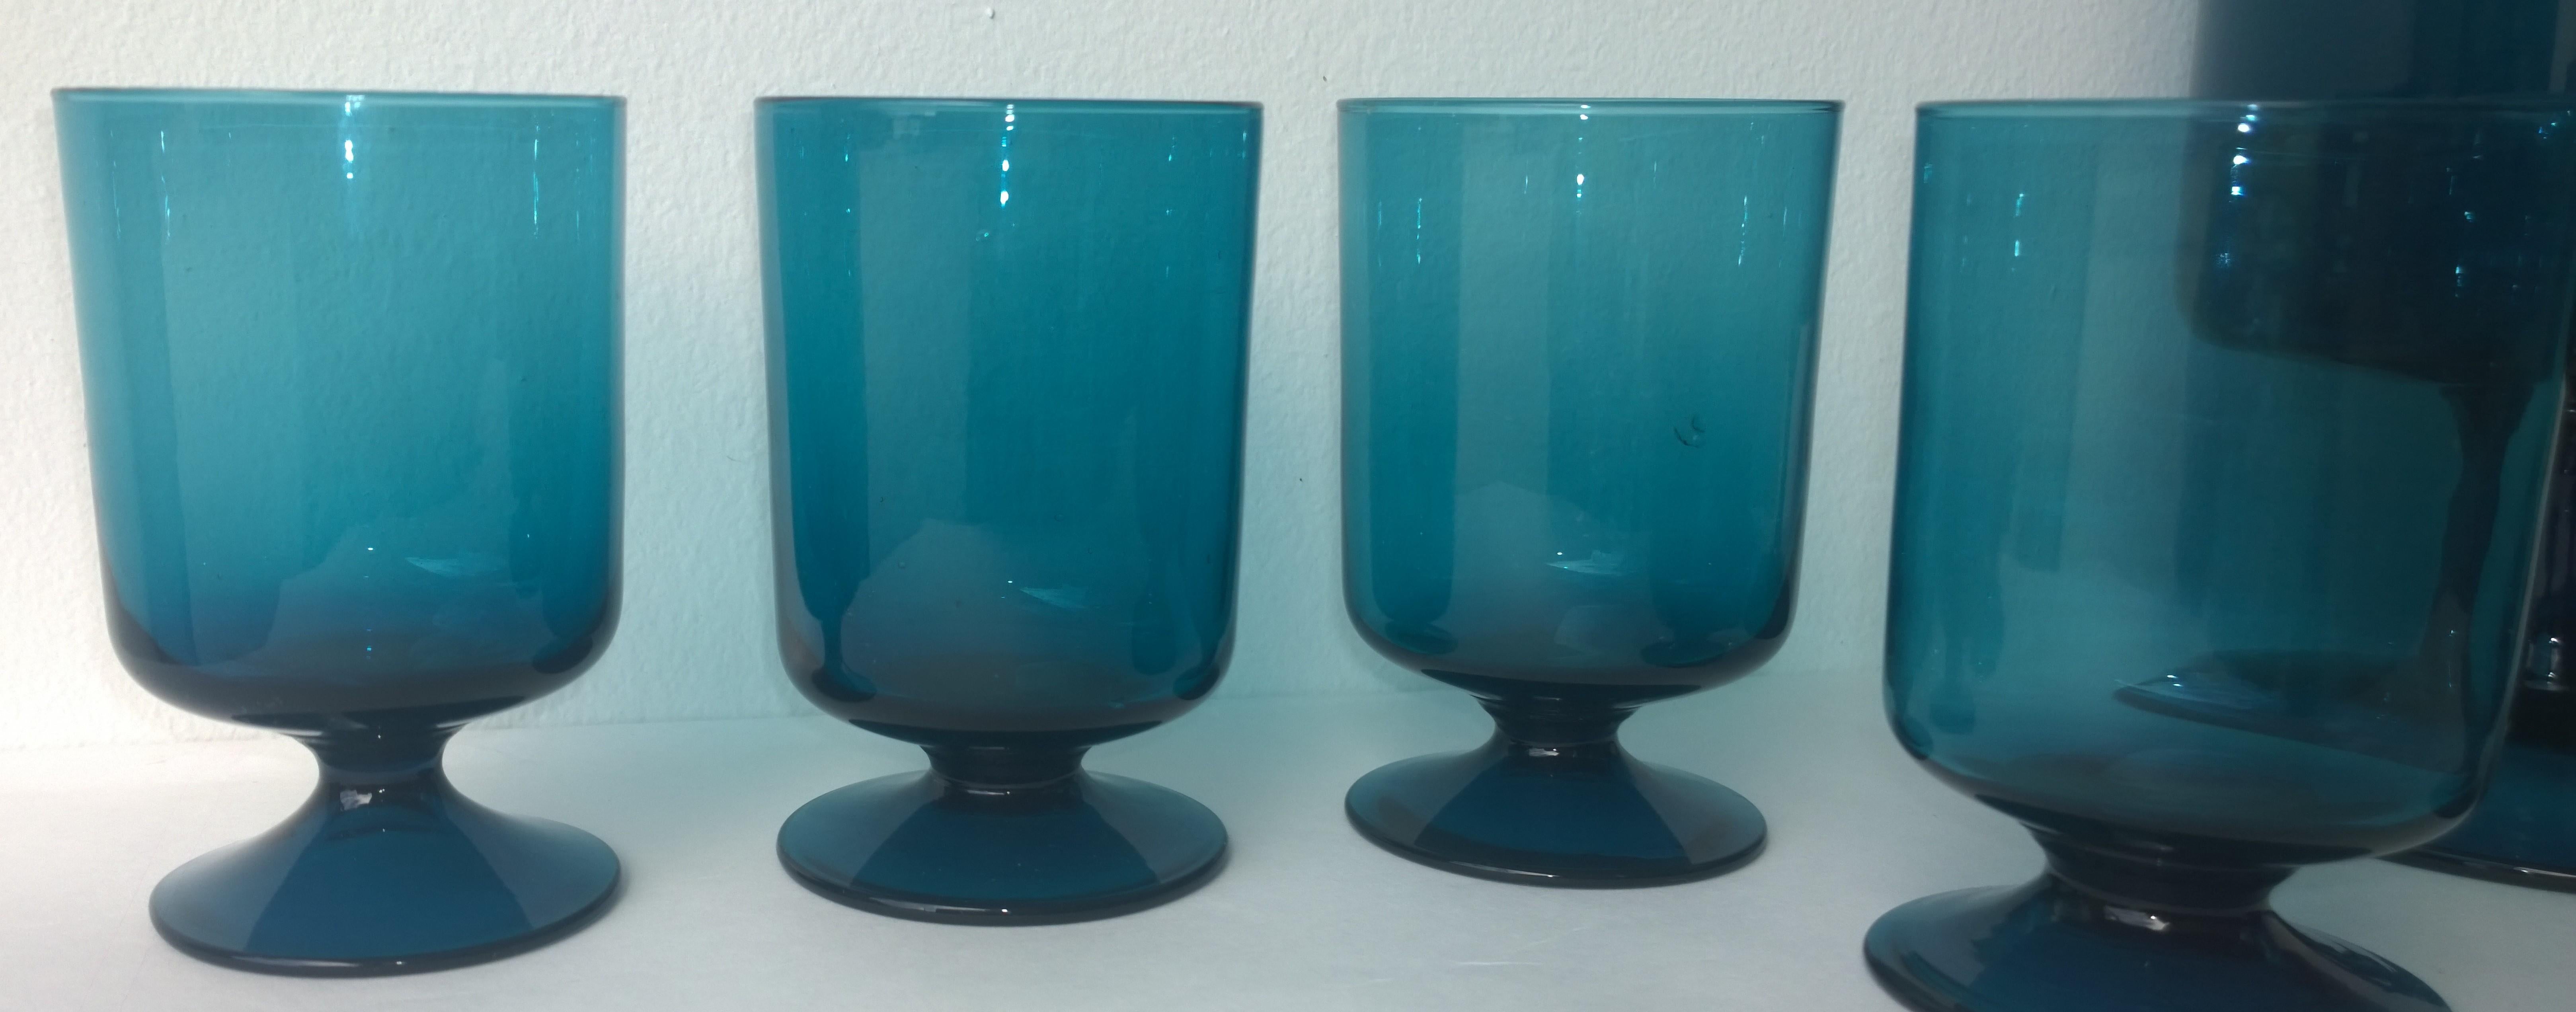 Translucent Teal Blue Blown Glass Decanter w/ Stopper & S/6 Petite Stem Glasses 4